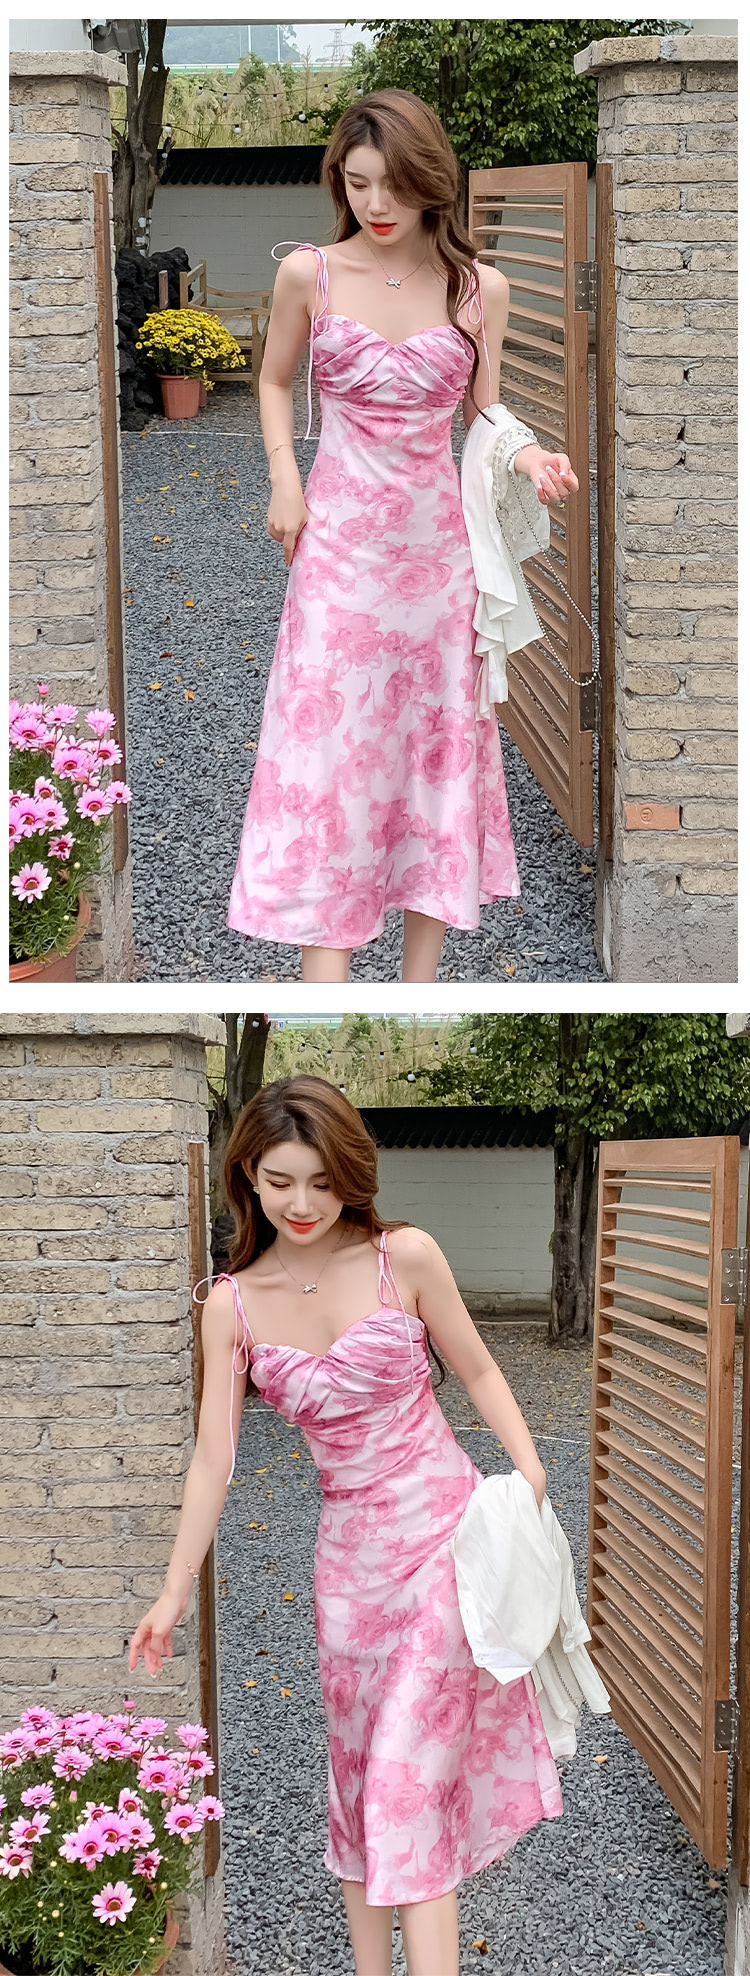 Sweet-Floral-Printed-Satin-Summer-Casual-Slip-Dress-Beach-Wear21